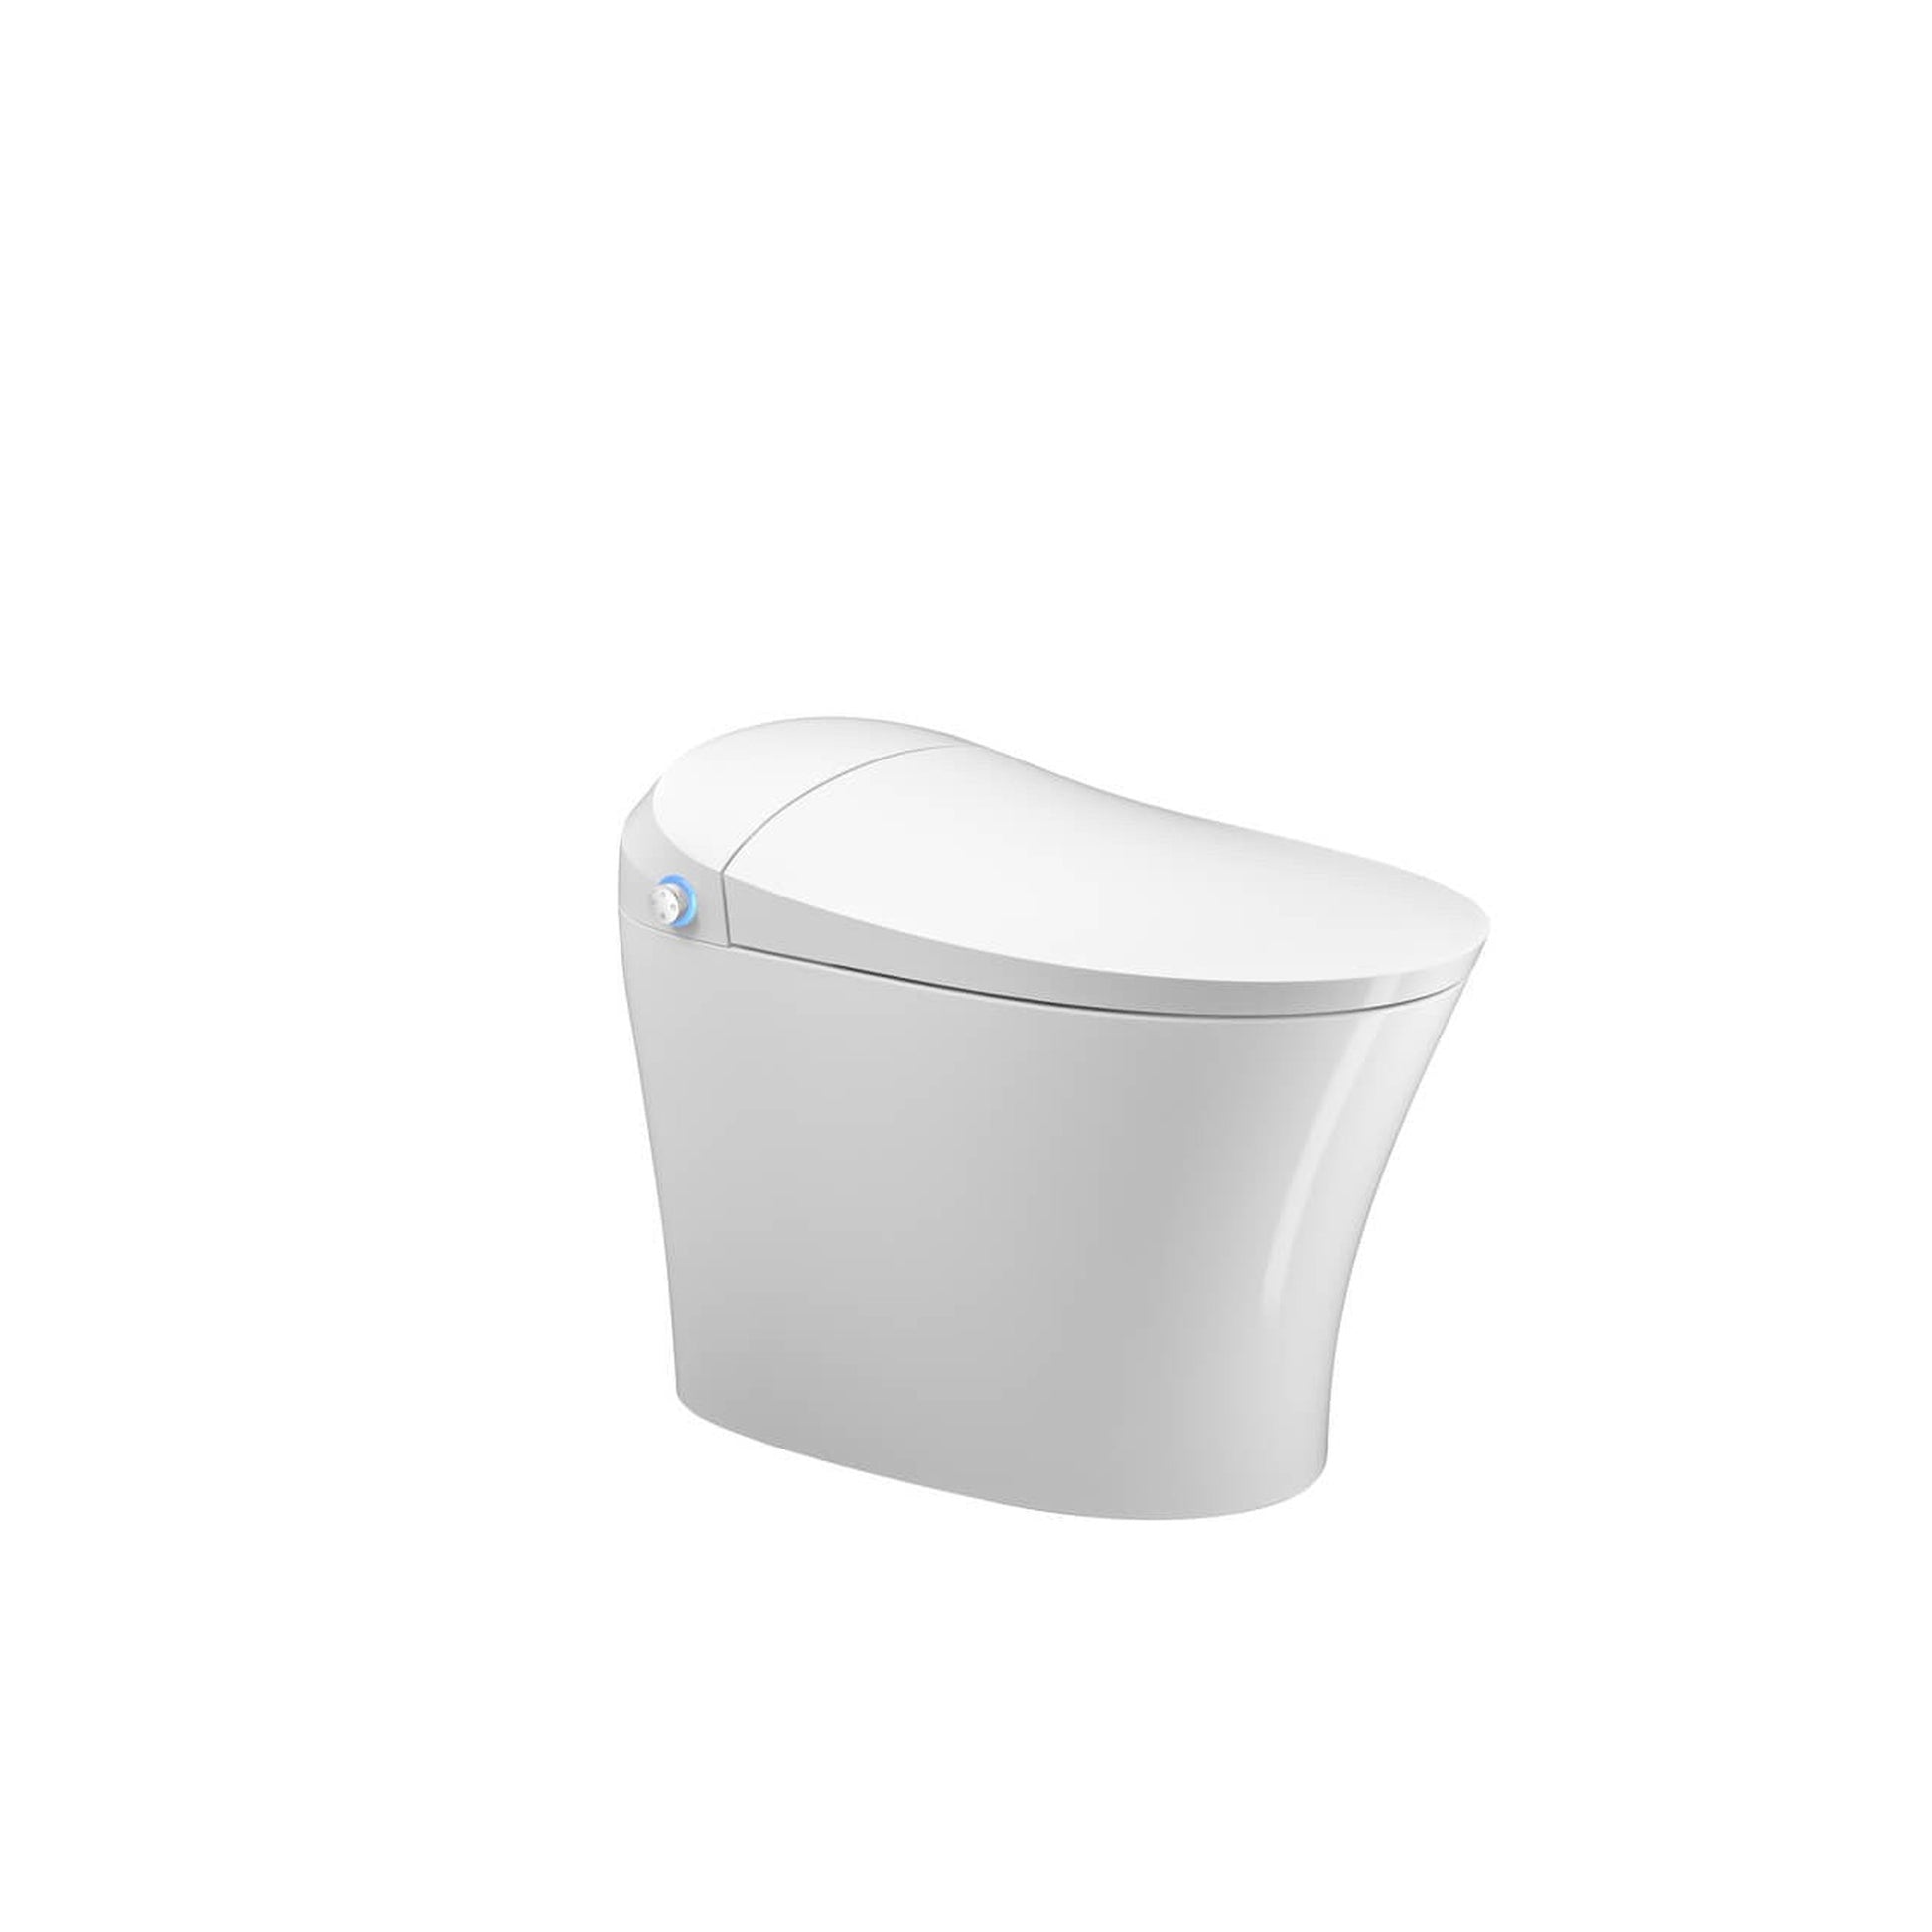 Castello USA New York White Simple Plus Smart Toilet With Built-In Bidet